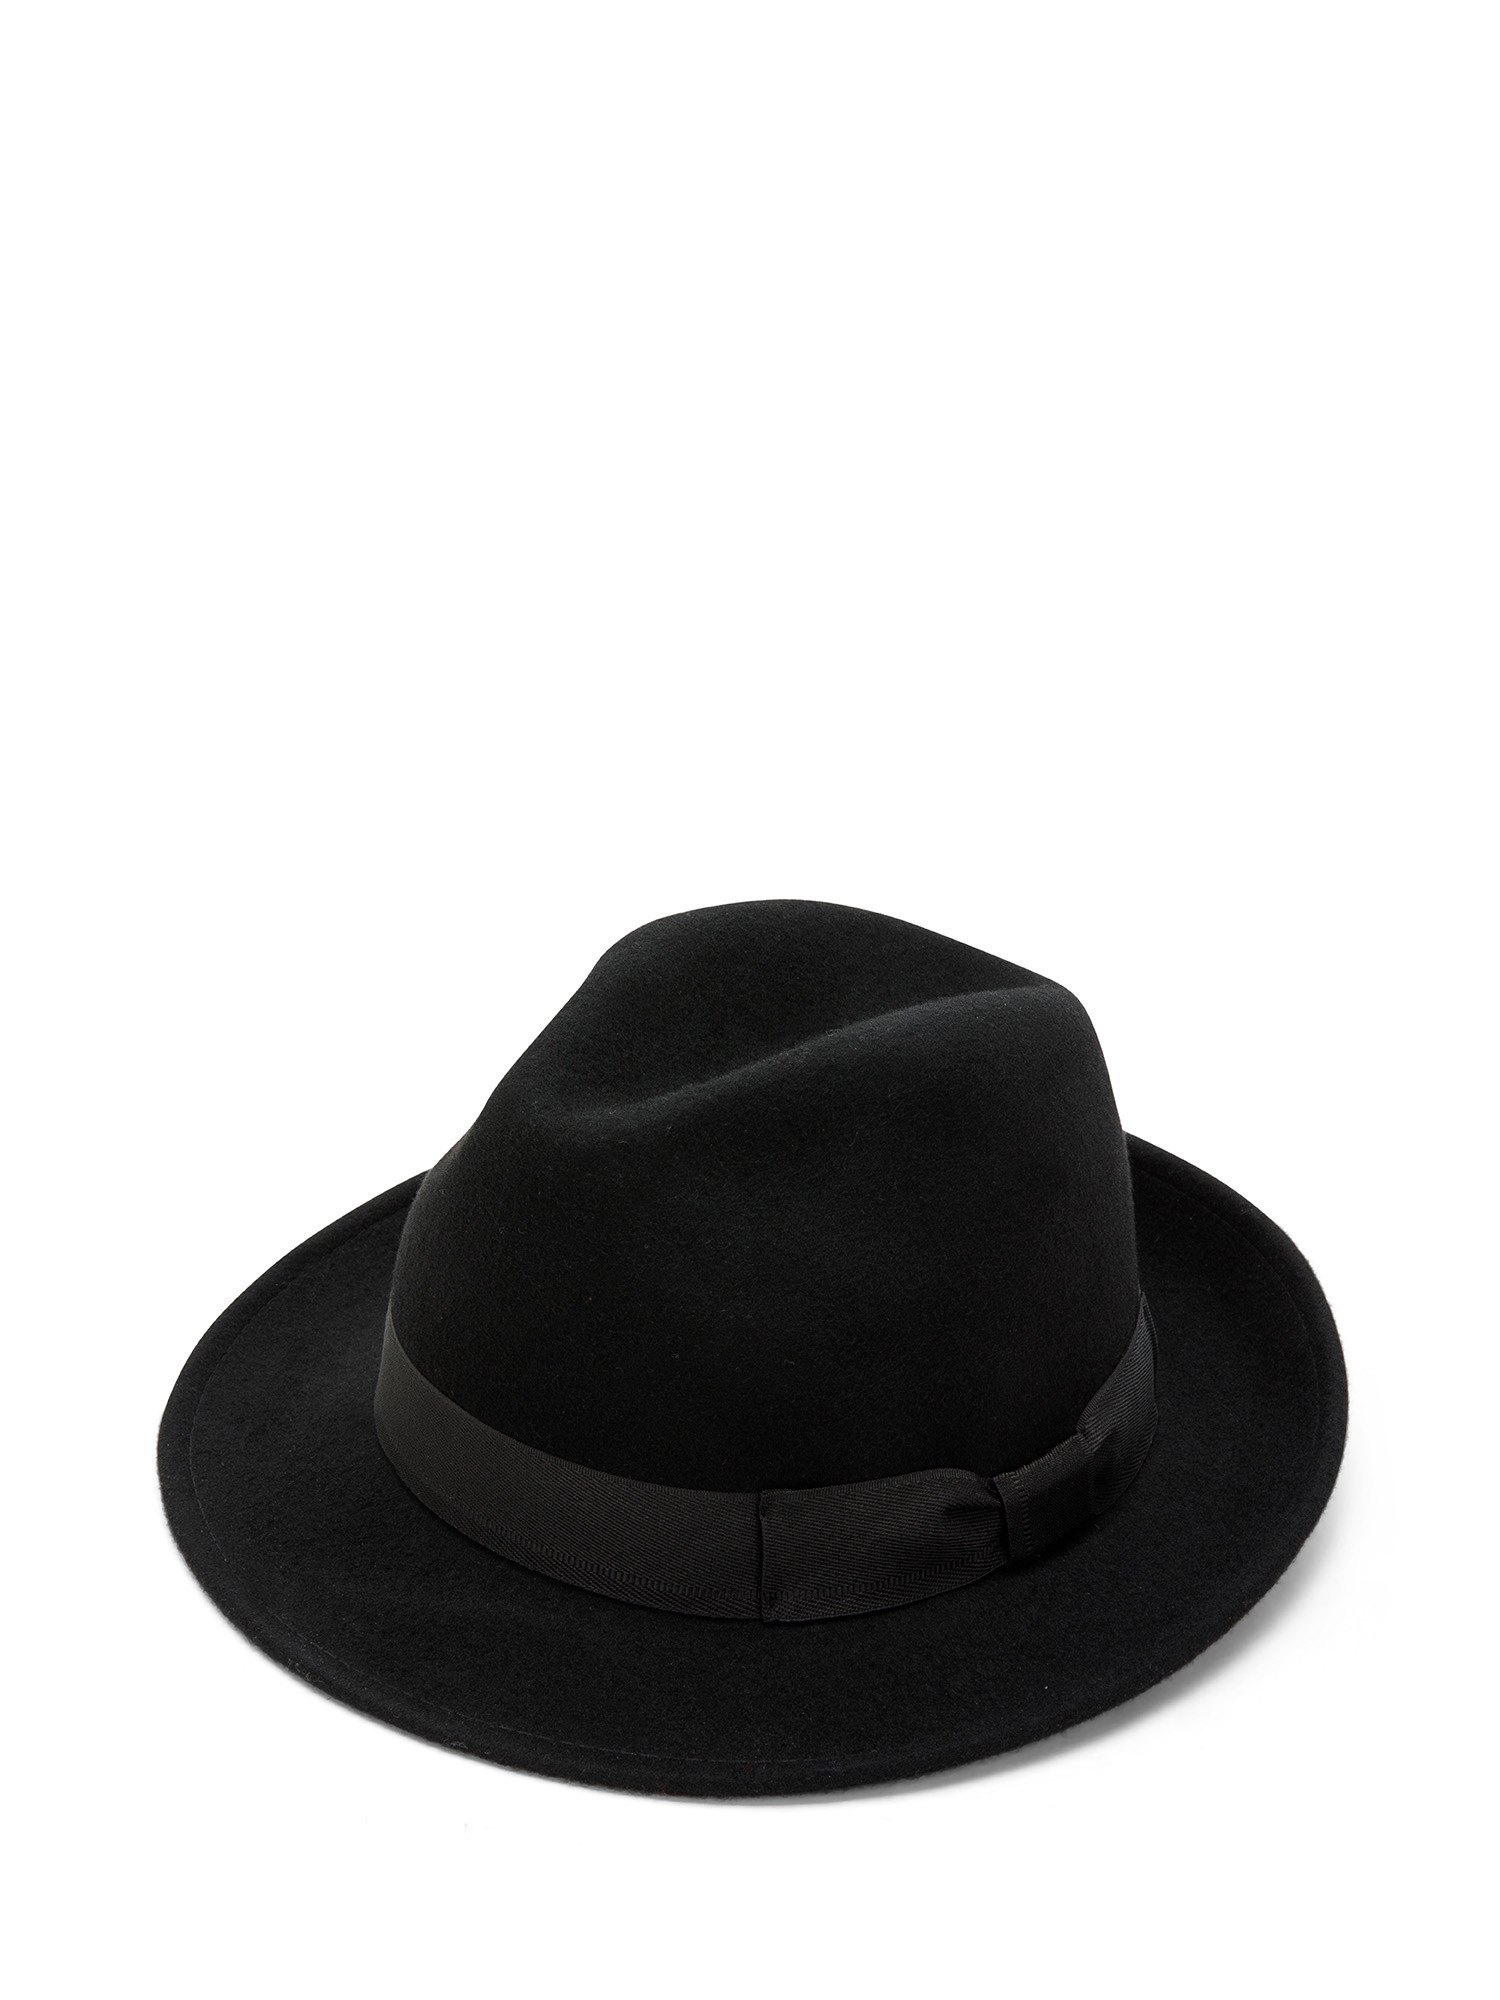 Luca D'Altieri - Felt hat, Black, large image number 0